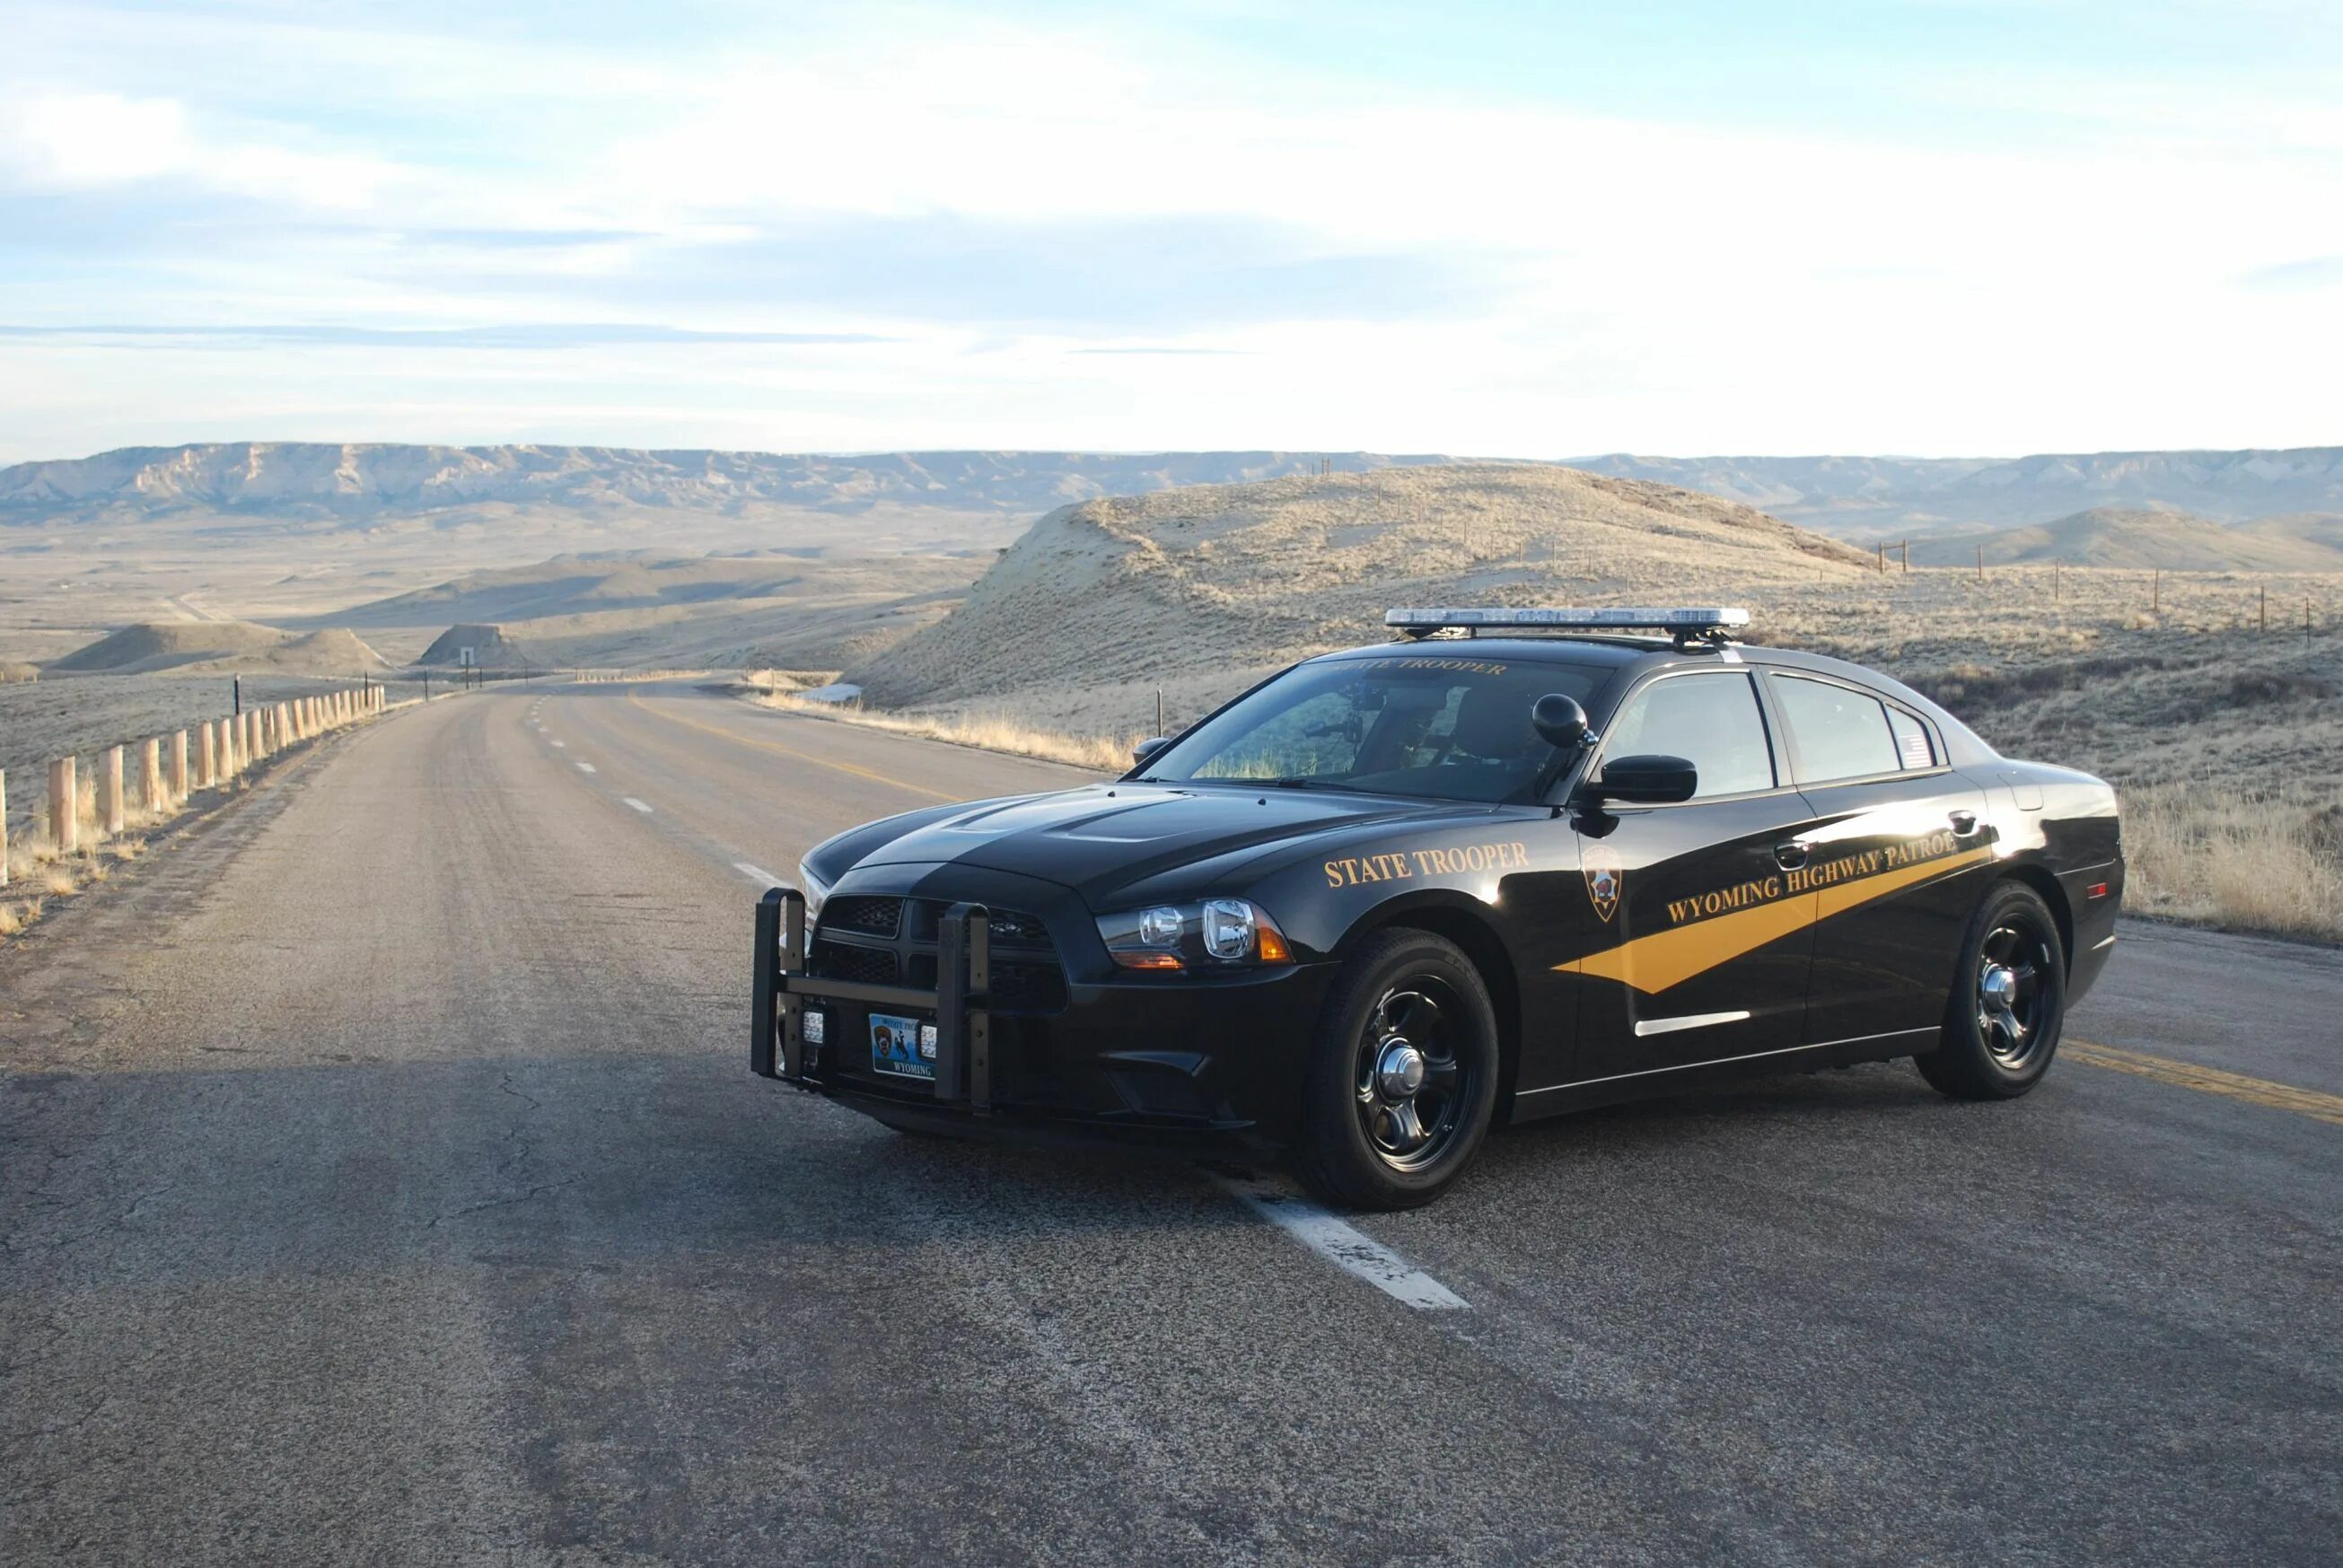 Dodge Charger 2014 Police. Wyoming Highway Patrol. Додж Чарджер Хайвей патруль. California Highway Patrol Додж. State cars